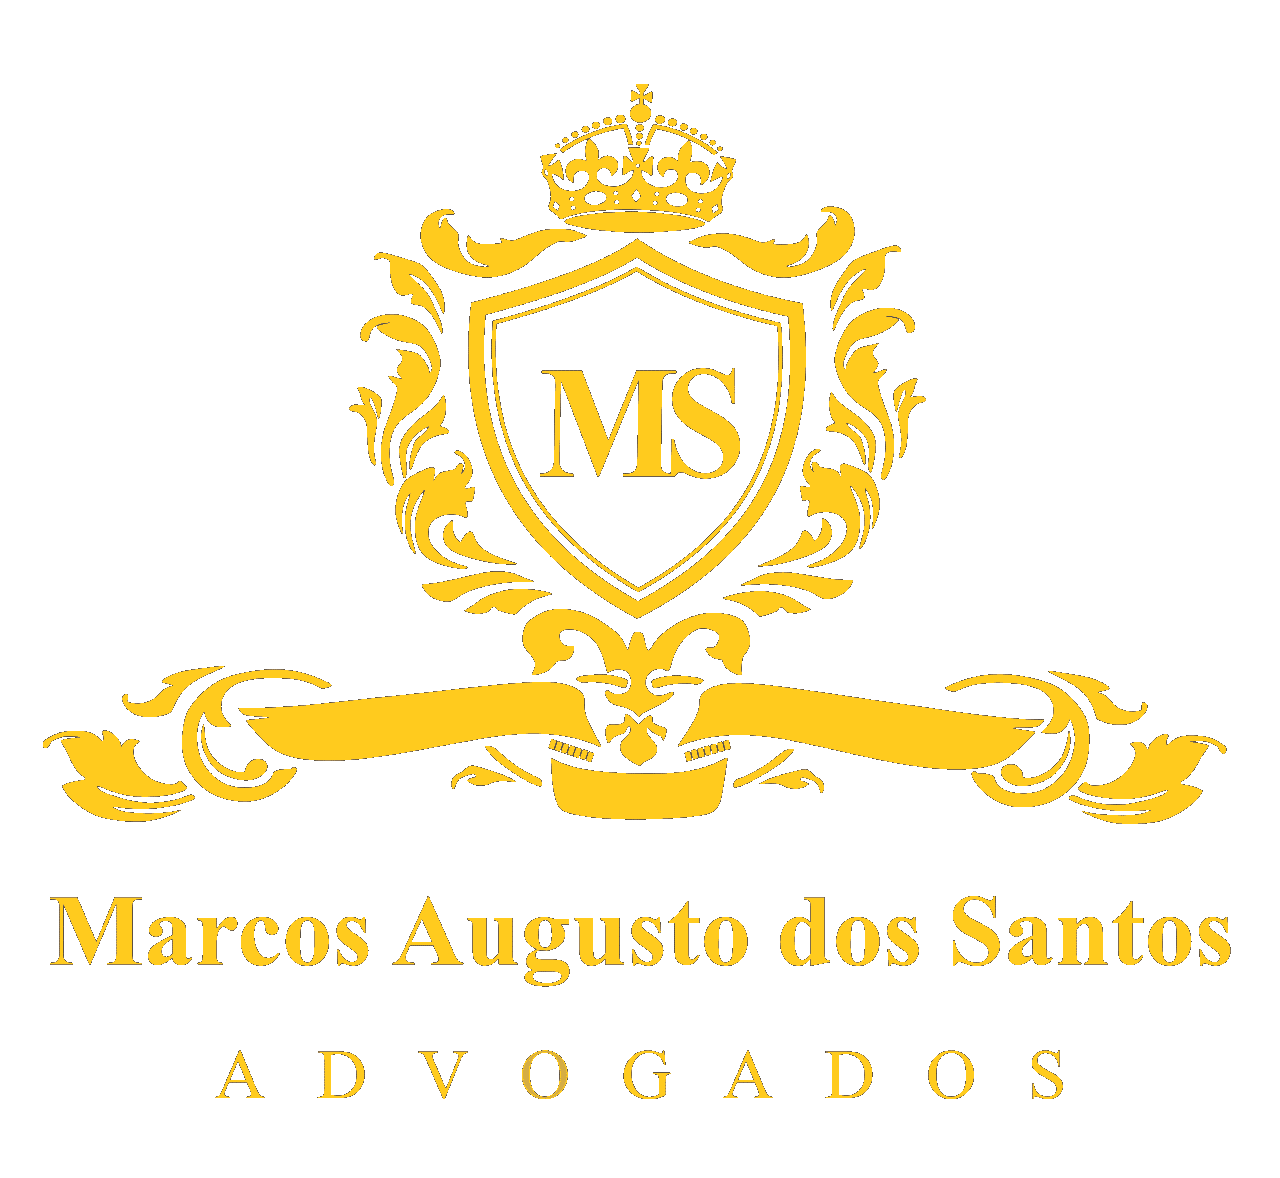 Advogado Marcos Augusto dos Santos